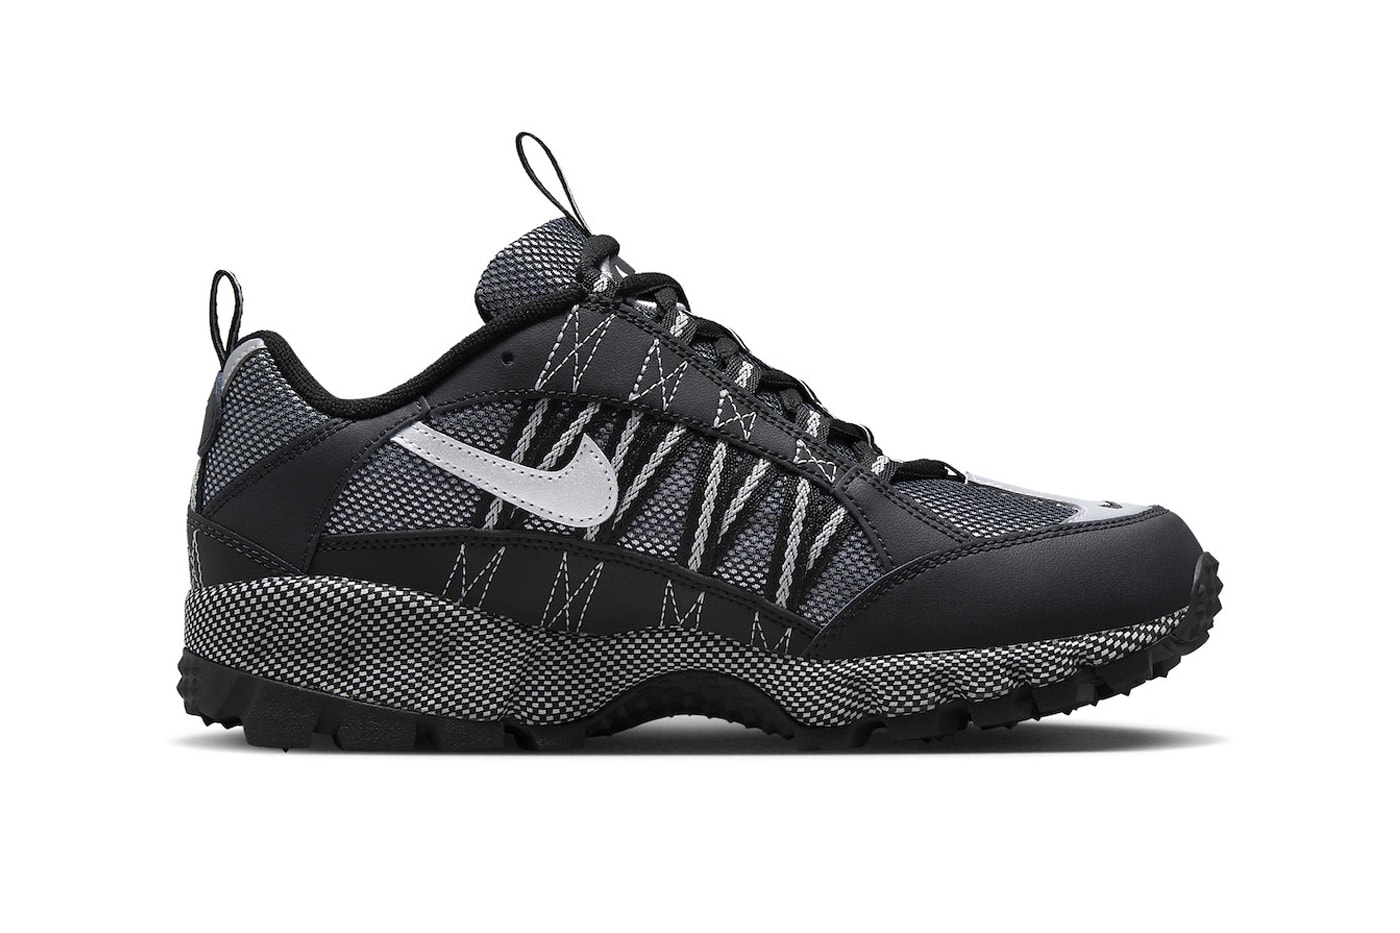 Nike Air Humara Arrives in "Black Metallic" Release Info FJ7098-002 Black/Metallic Silver-Metallic Silver swoosh hiking shoes sneakers outdoor trail shoe peter fogg